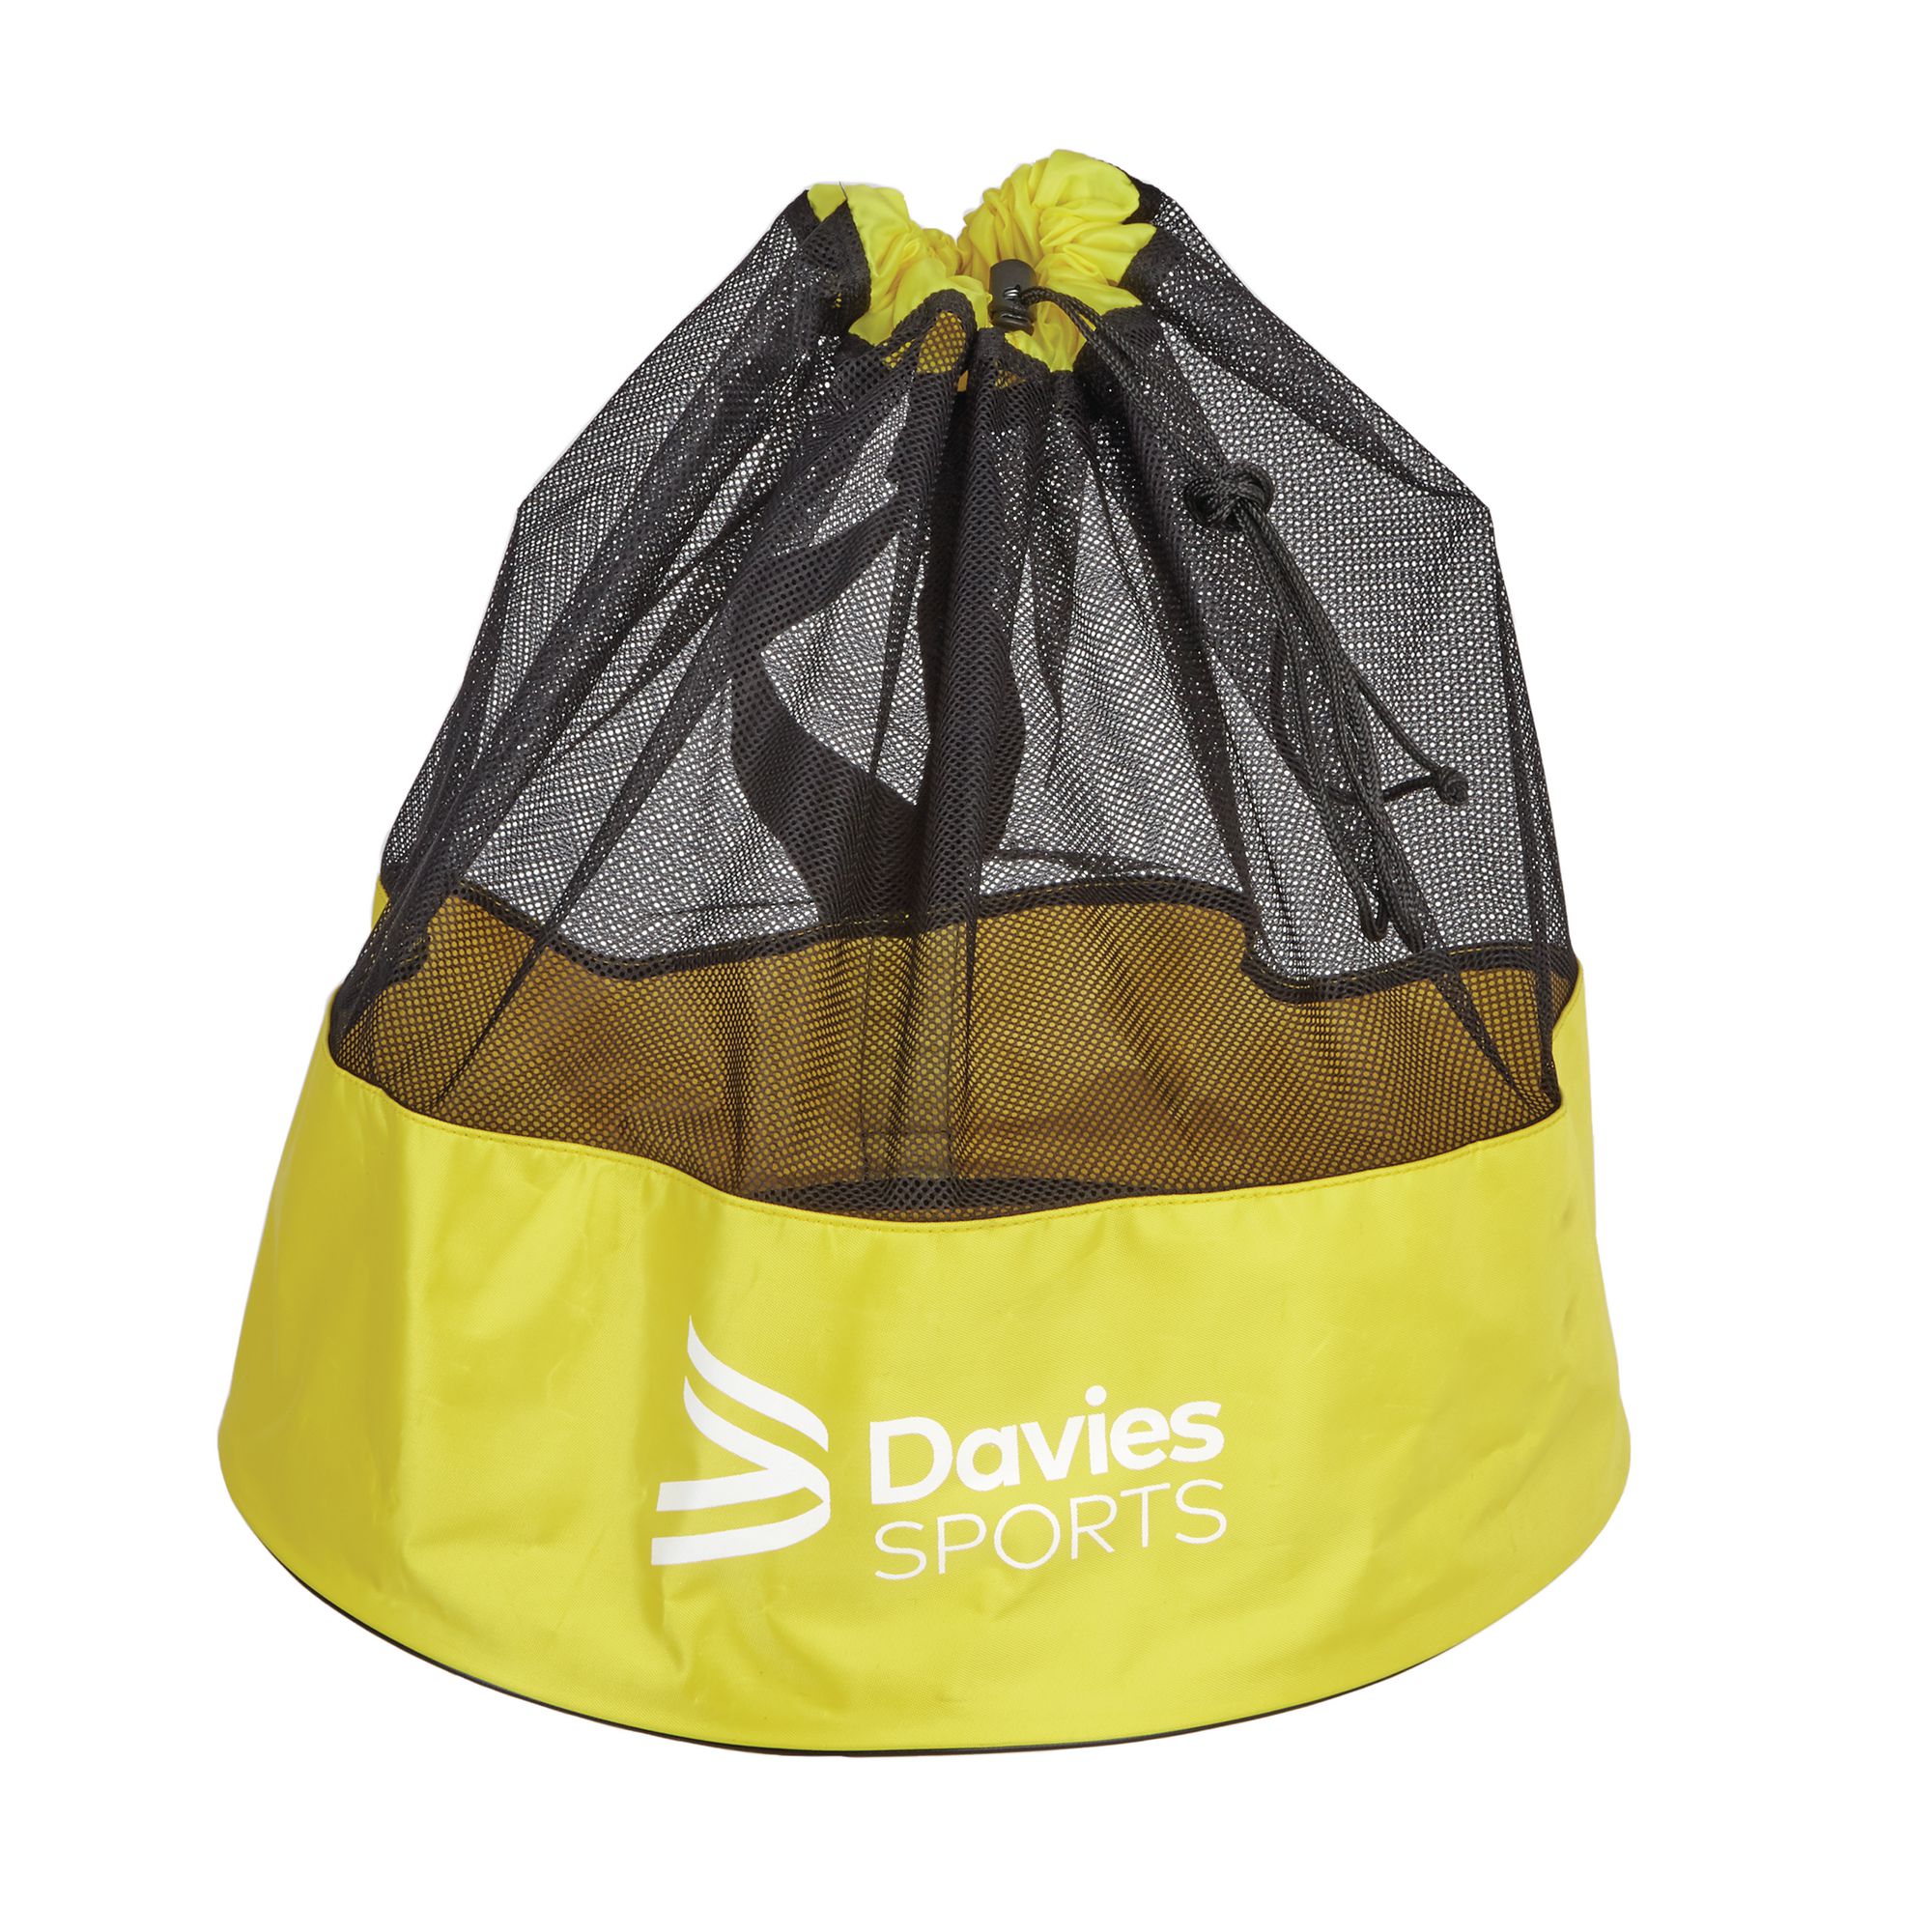 Davies Sports All Purpose Holdall Yellow